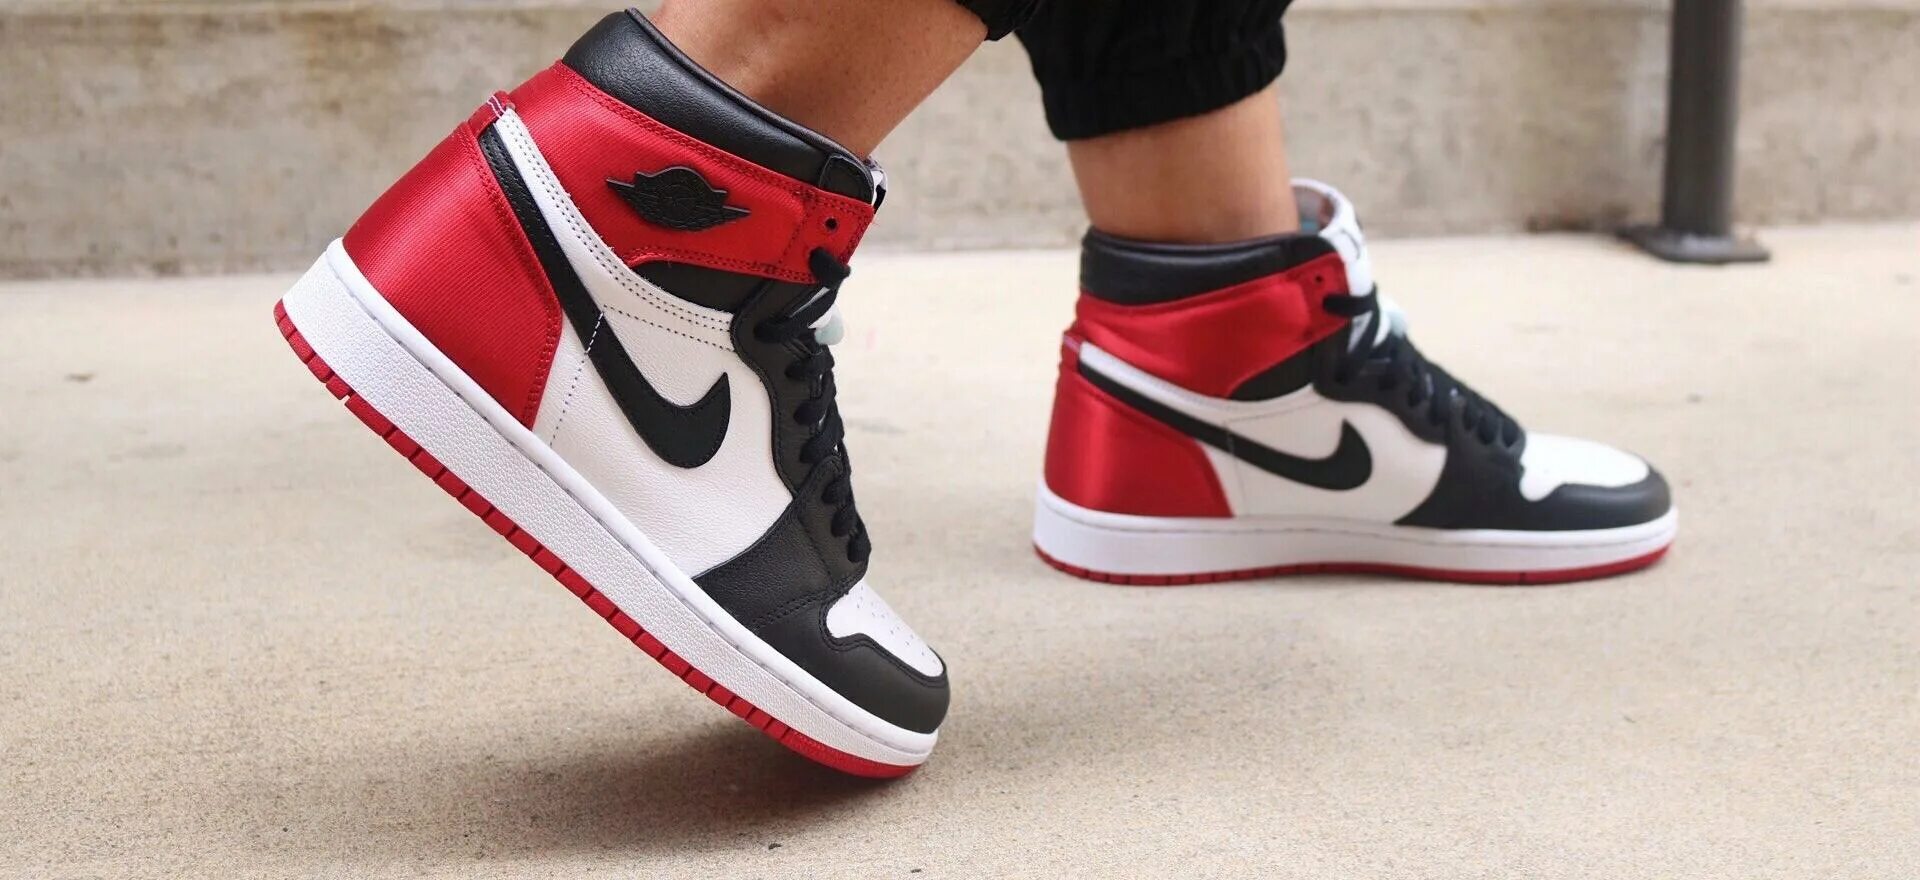 Nike jordan 1 og. Nike Air Jordan 1 Retro High og. Nike Air Jordan 1 Wmns. Nike Air Jordan 1 High Black Toe. Nike Air Jordan 1 Retro High og Black Toe.